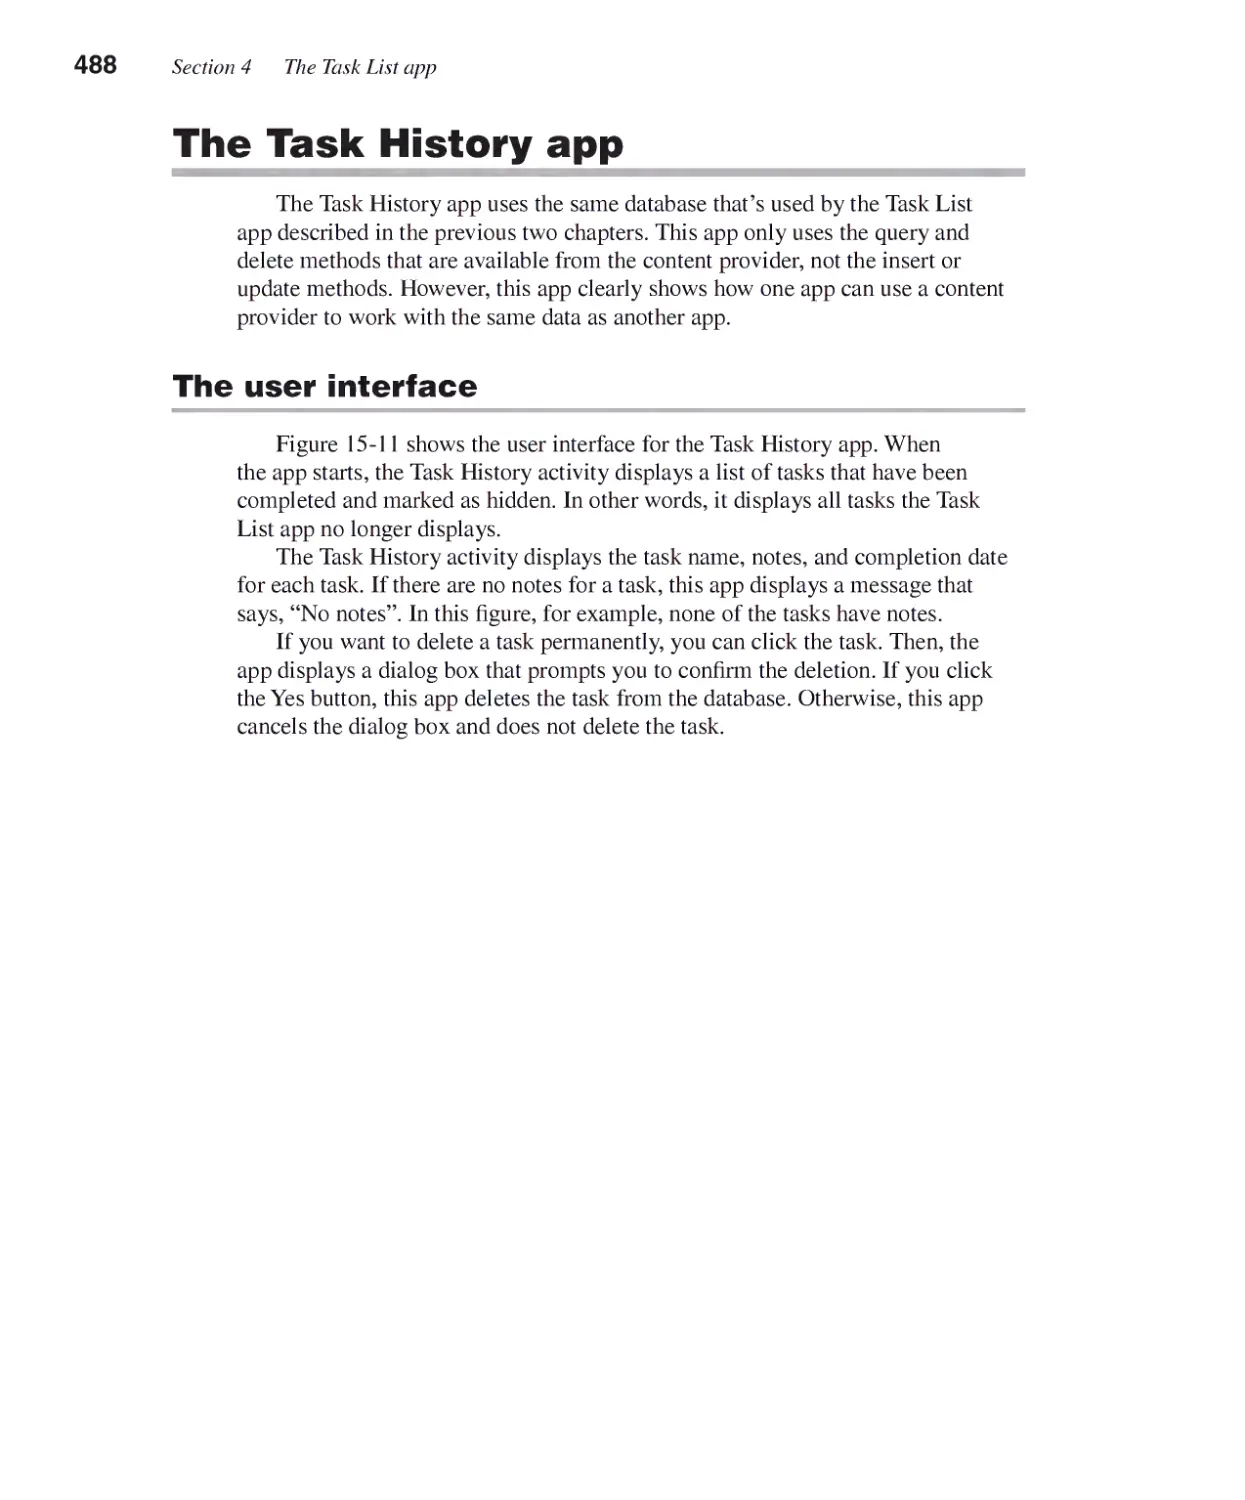 The Task History App